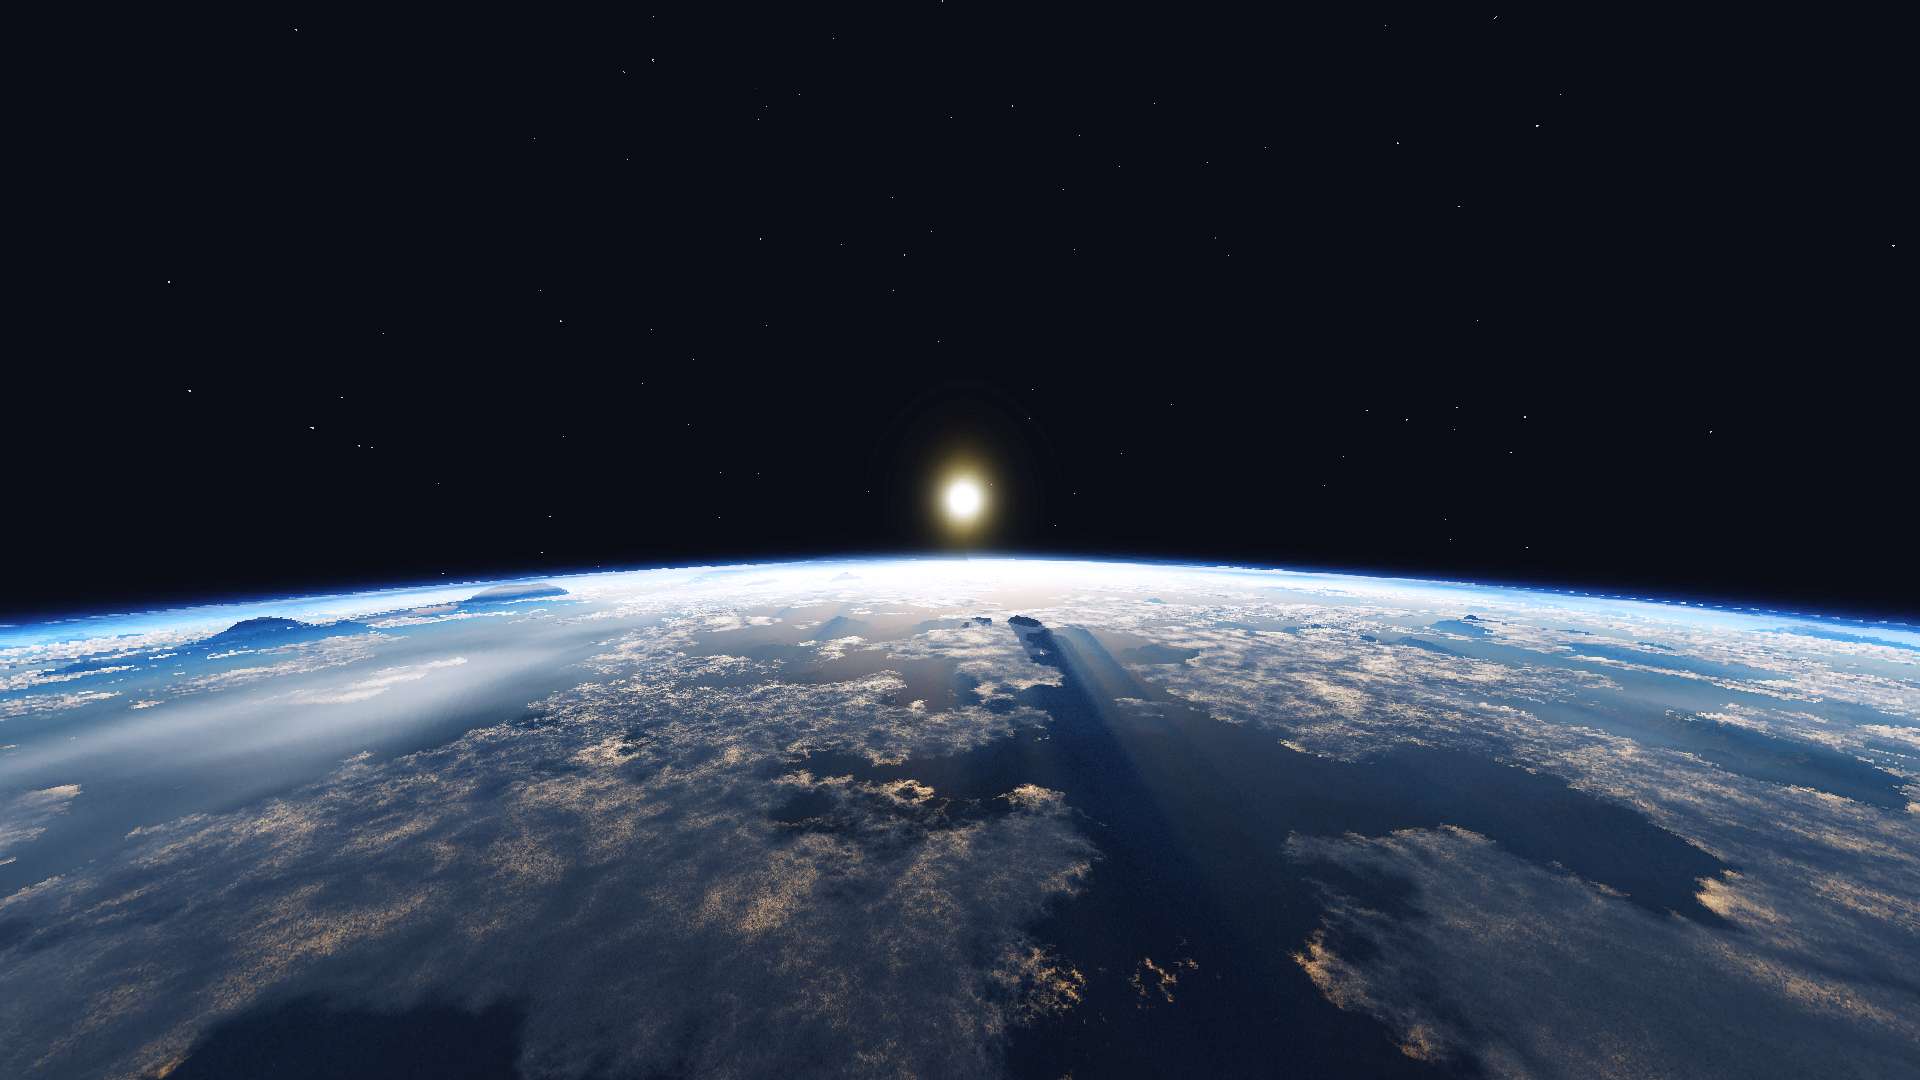 Earth Sky 16x by Yuruze on PvPRP